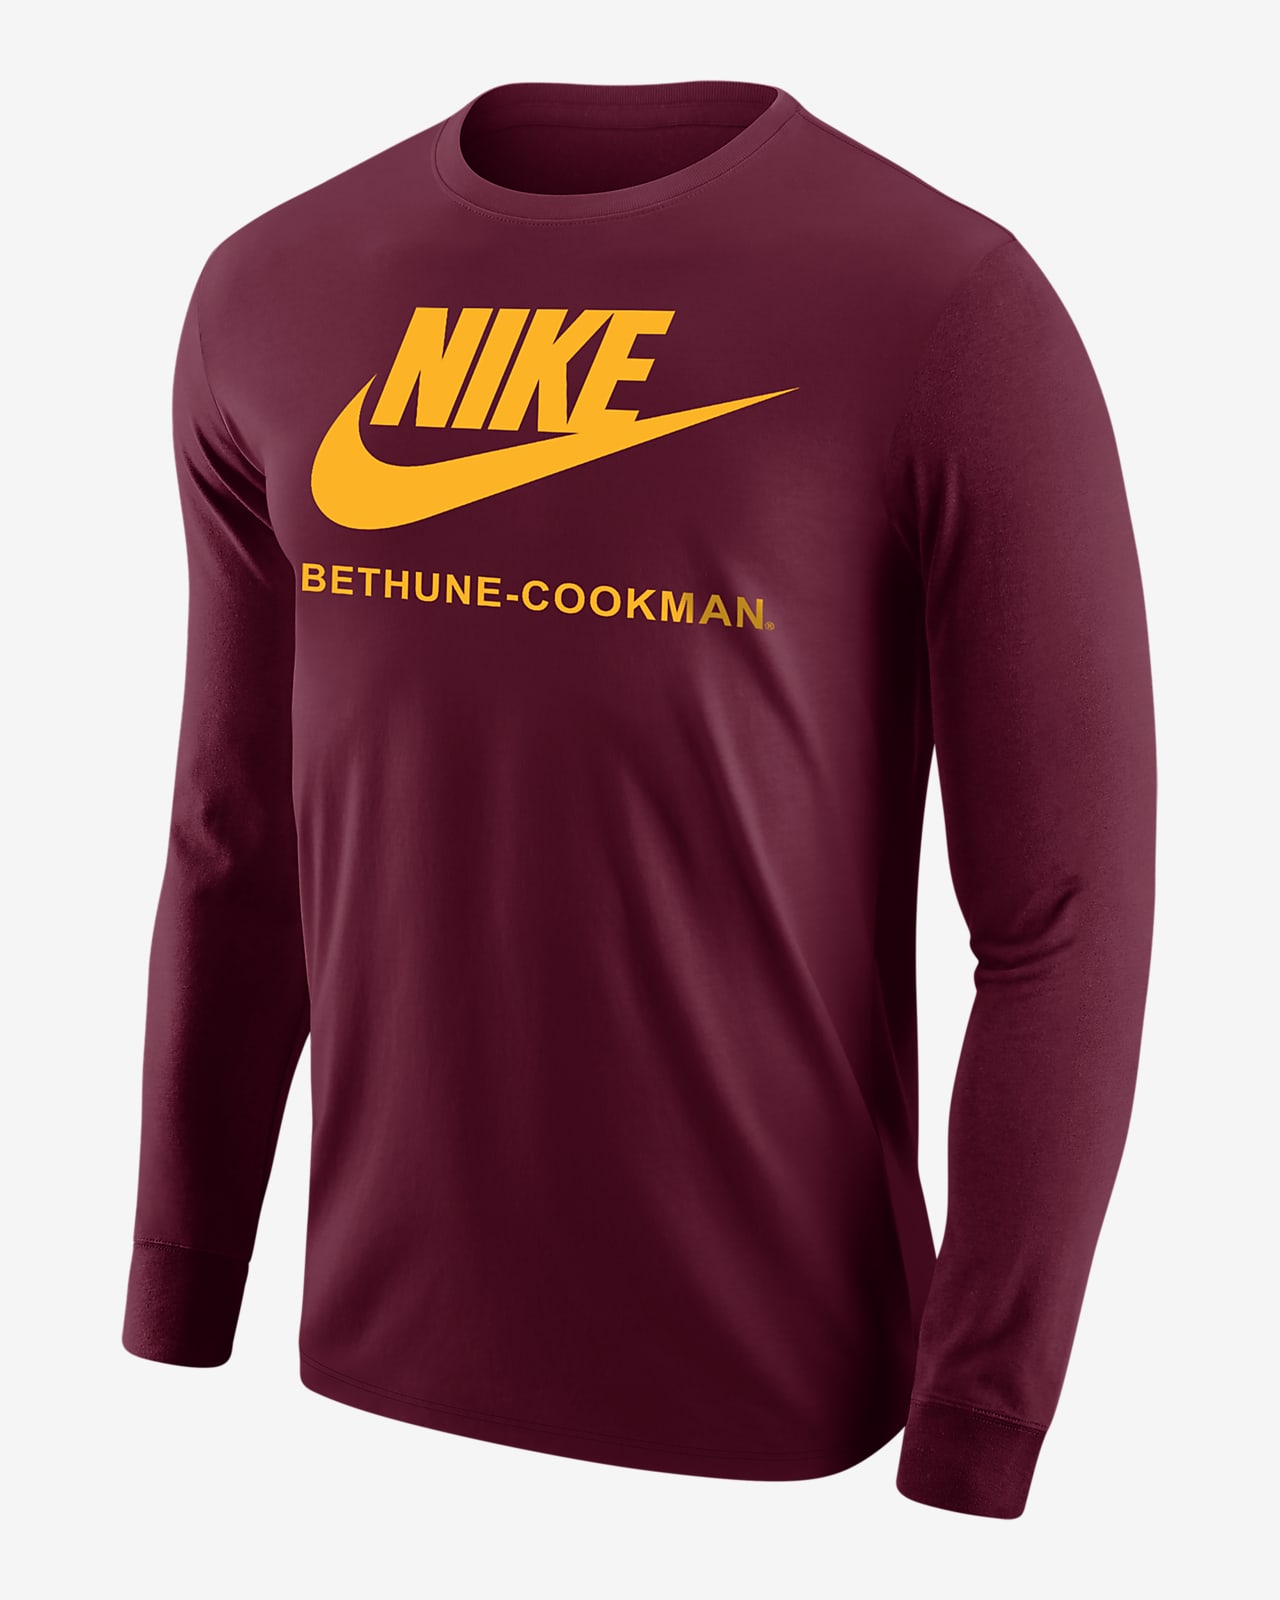 Nike College 365 (Bethune-Cookman) Men's Long-Sleeve T-Shirt